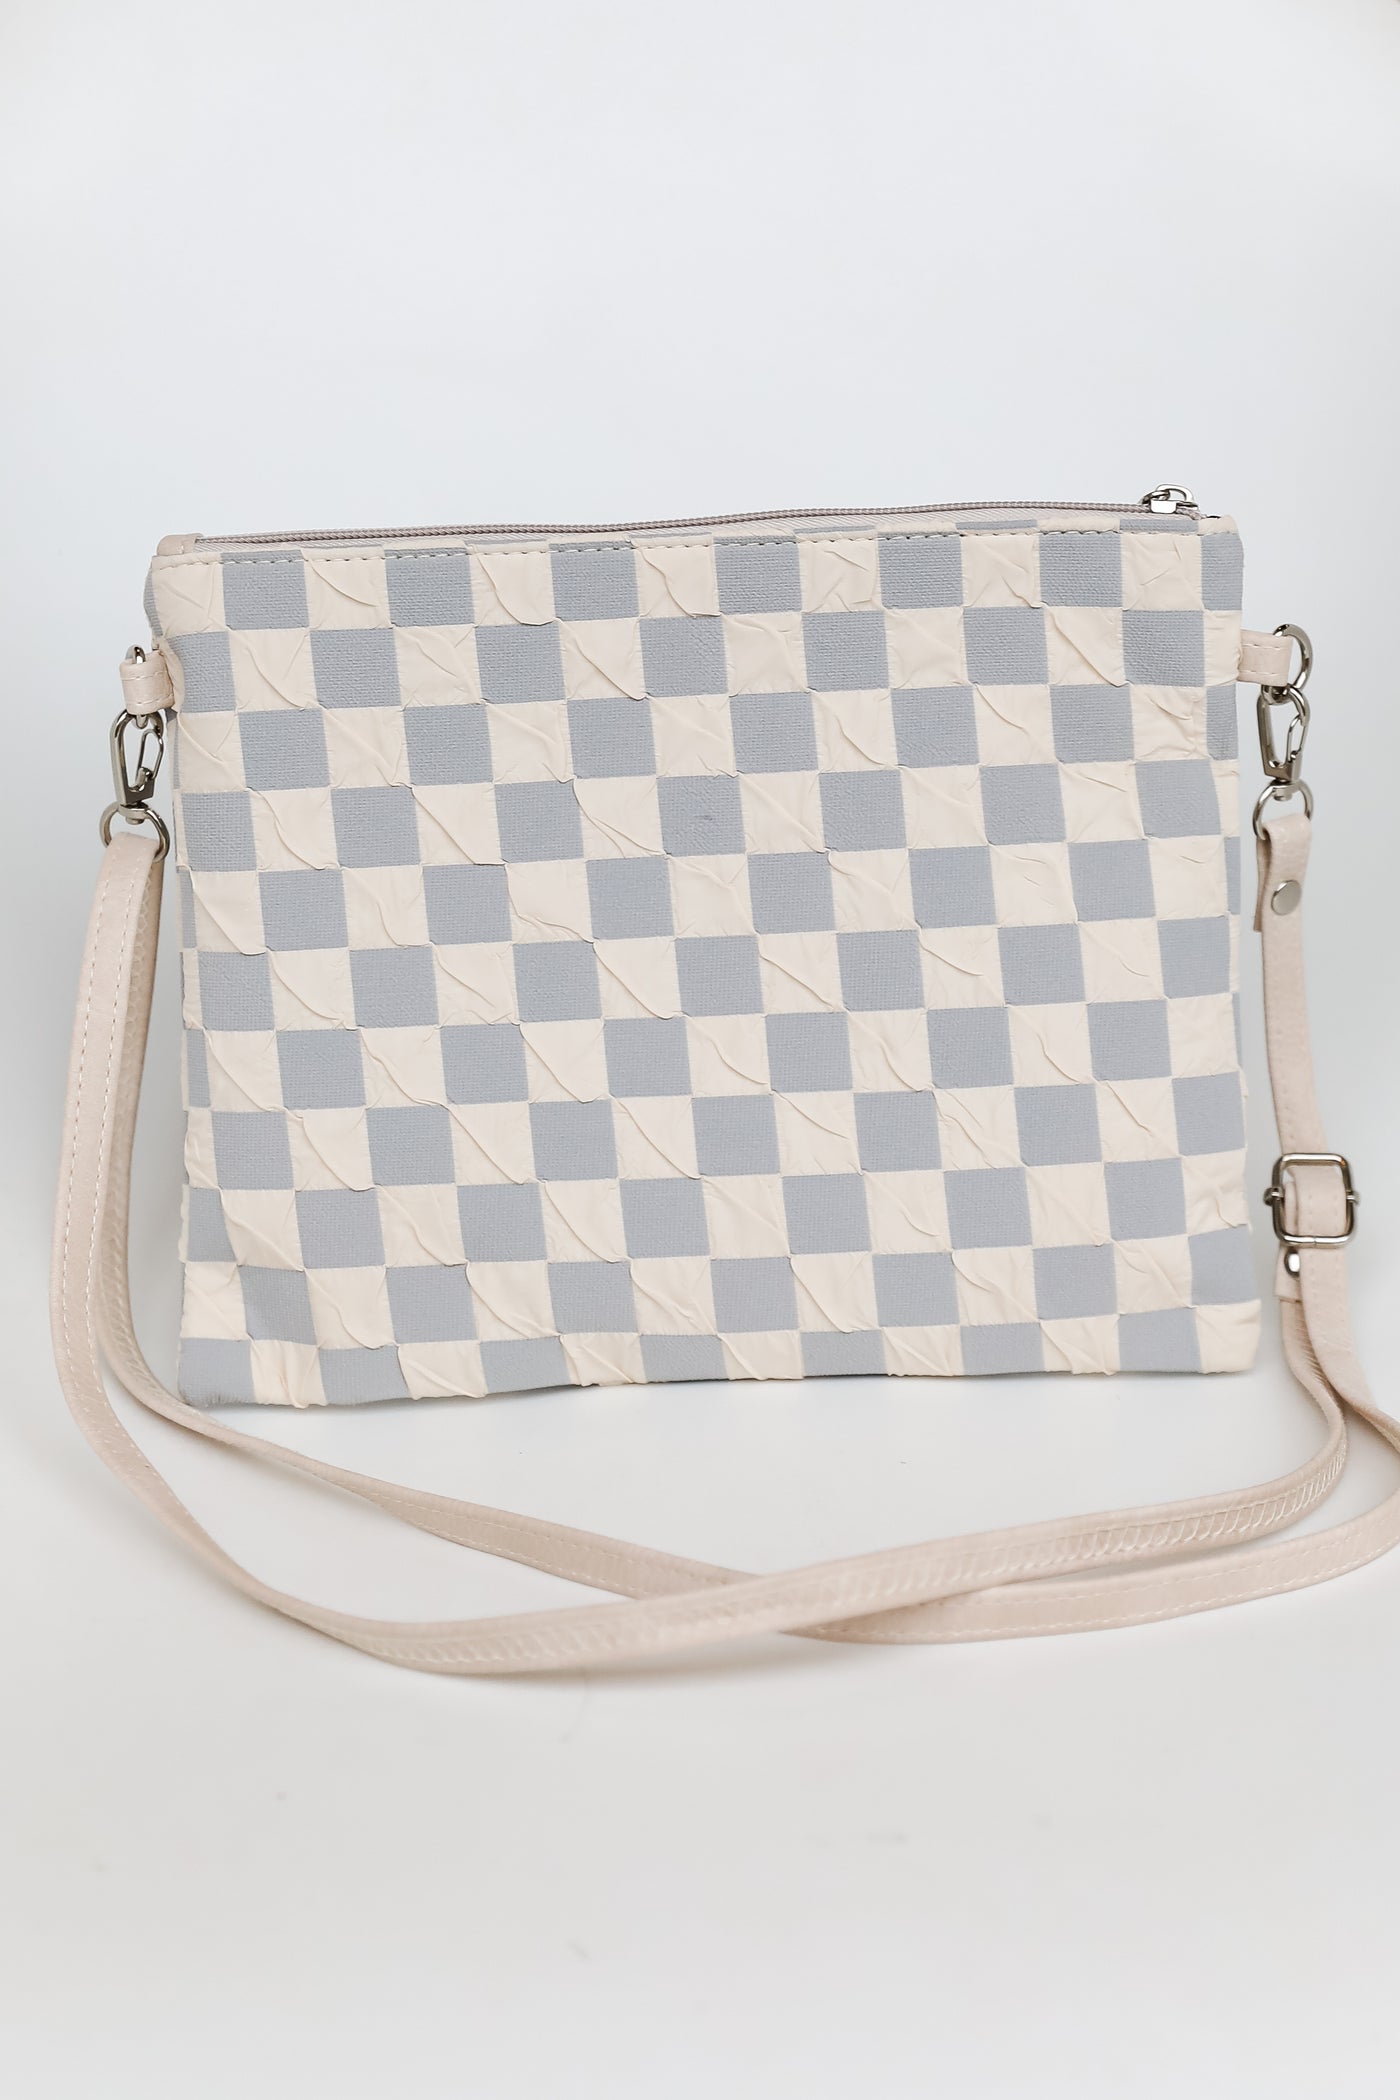 Grey Checkered Crossbody Bag flat lay